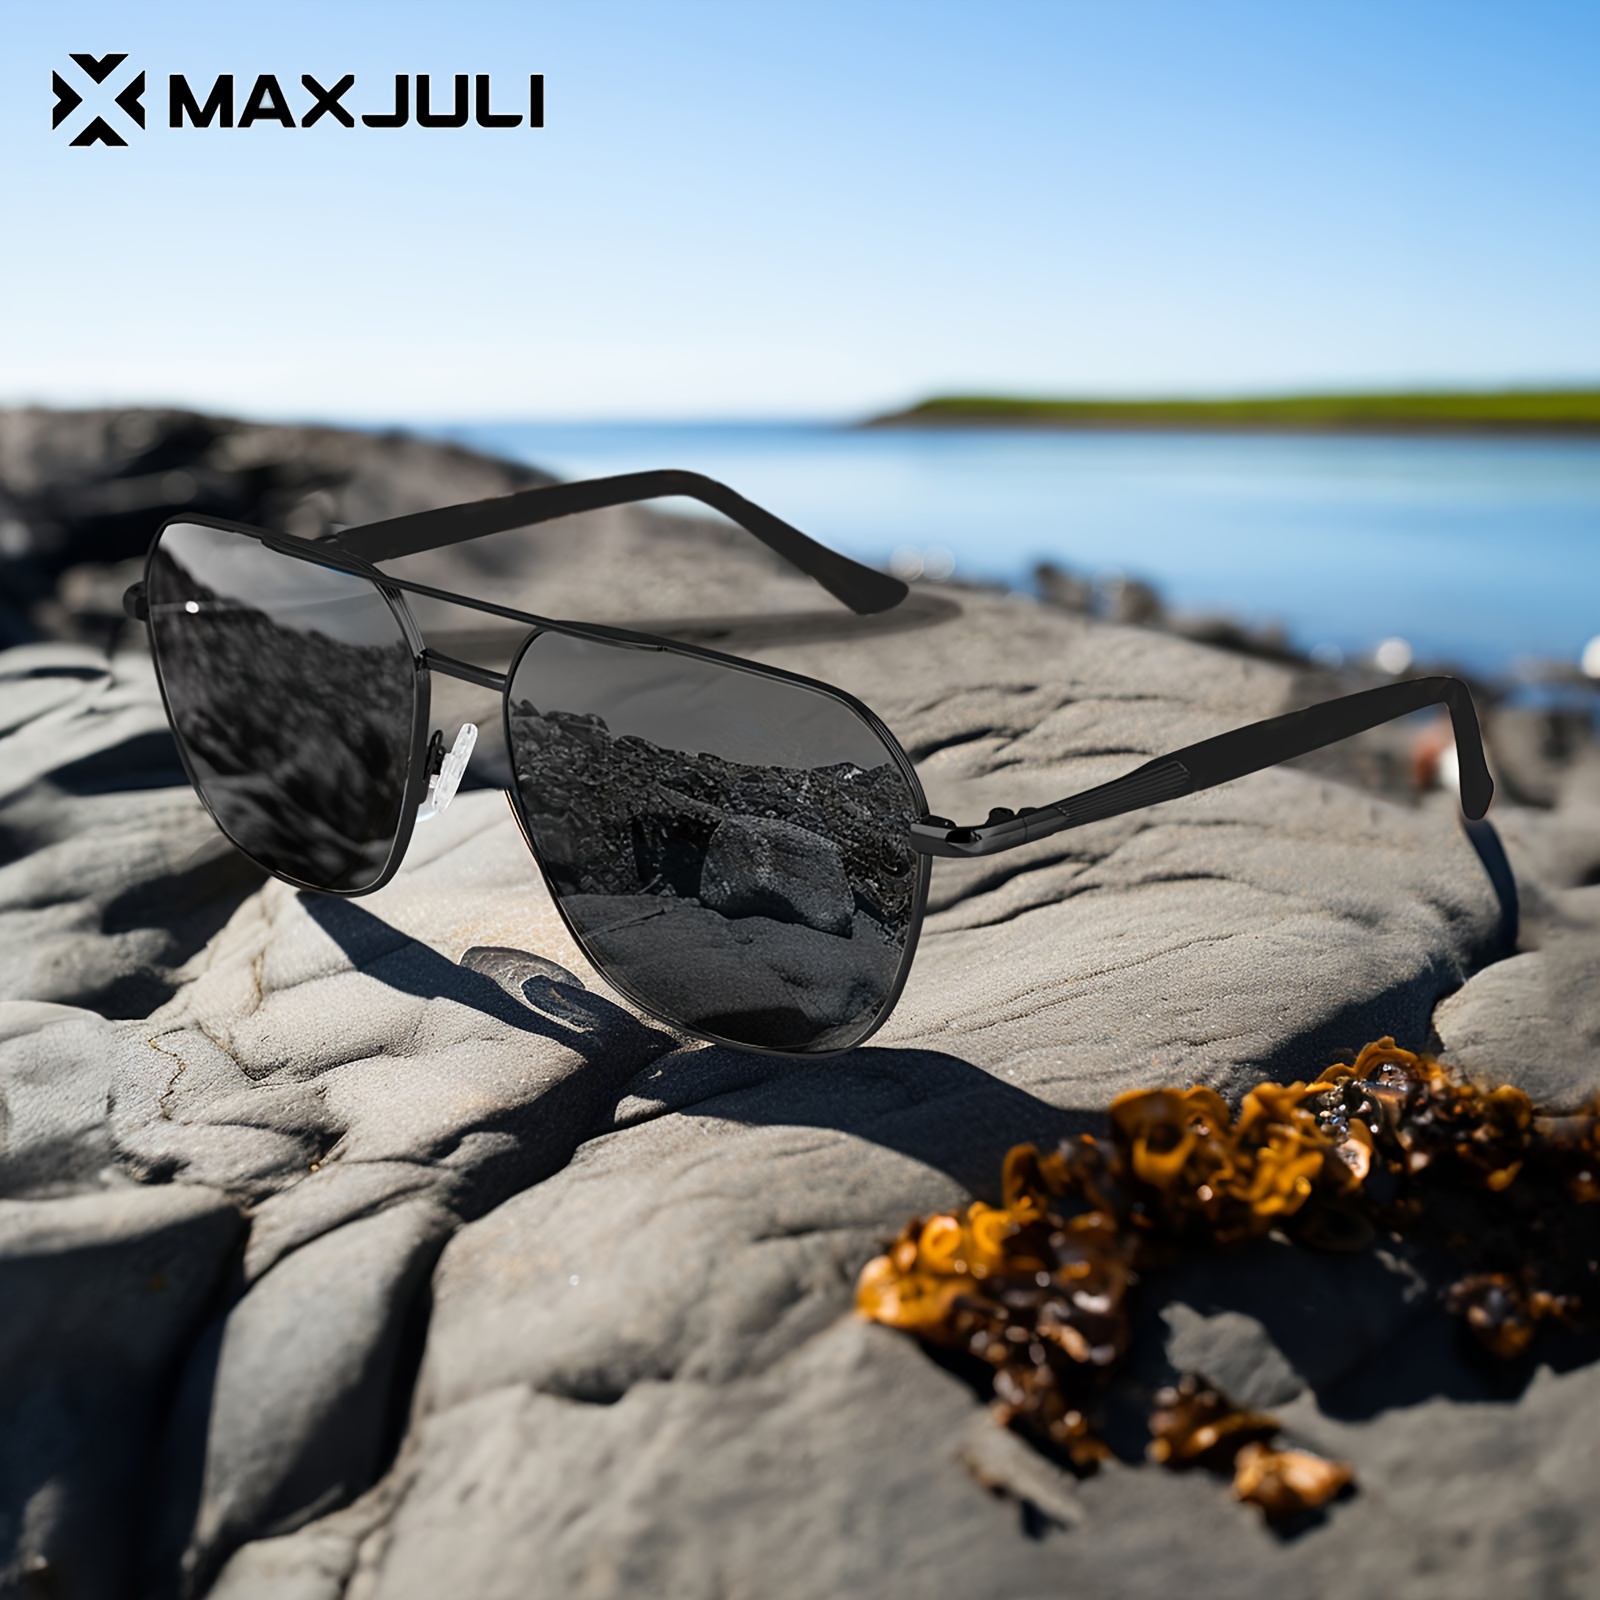 MAXJULI XXL Extra Large Polarized 151mm For Big Heads Men Metal Glasses